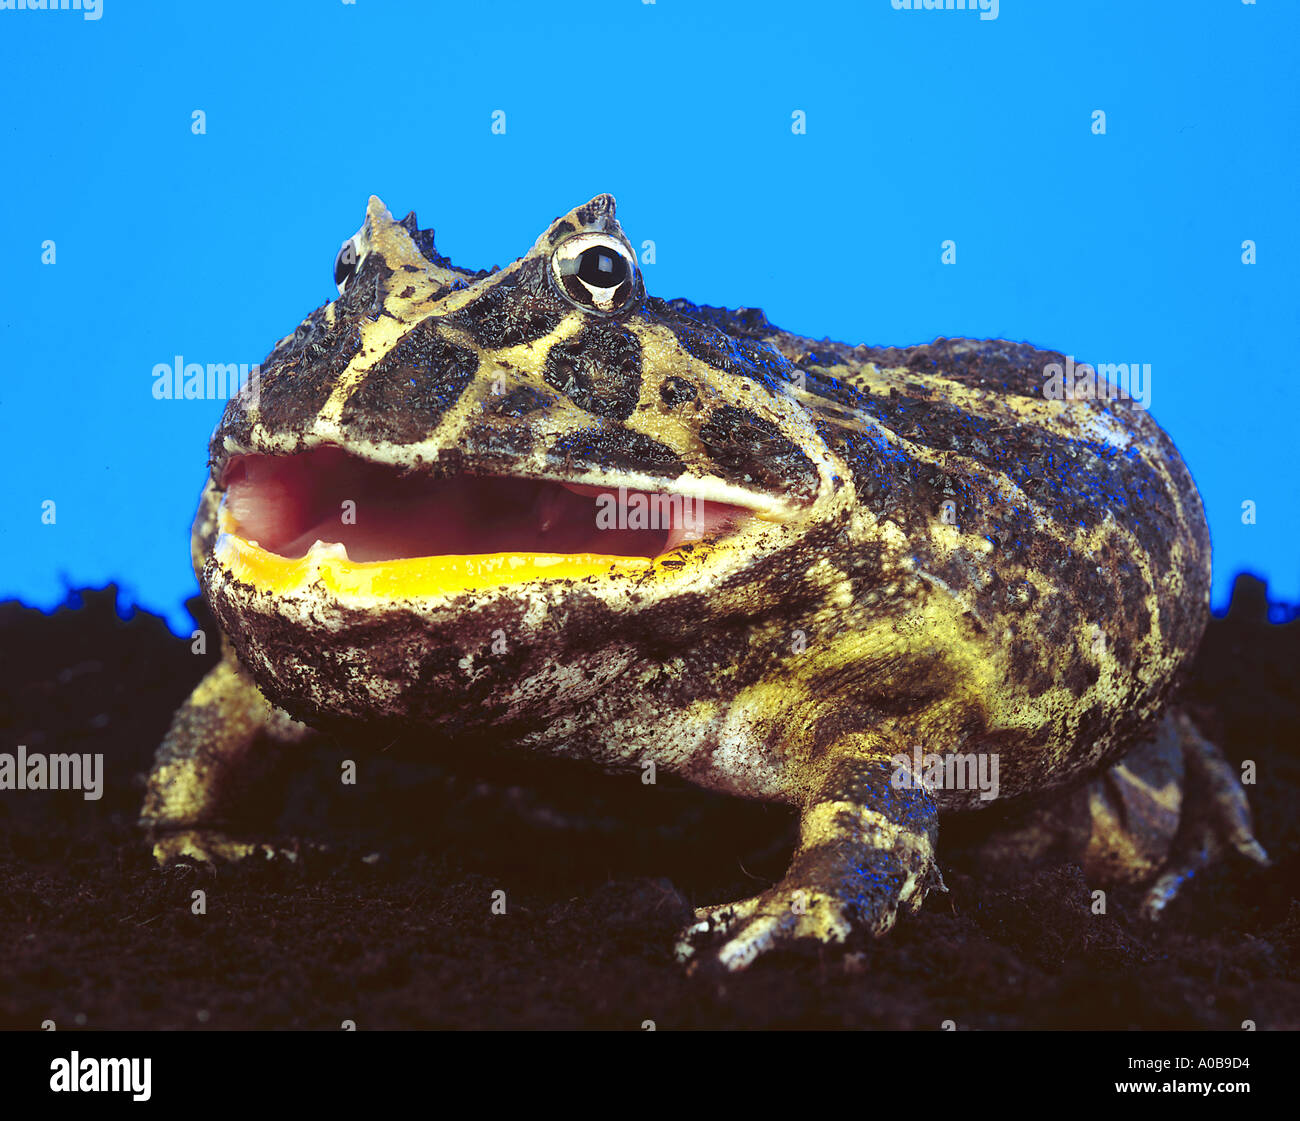 Frog teeth -Fotos und -Bildmaterial in hoher Auflösung – Alamy